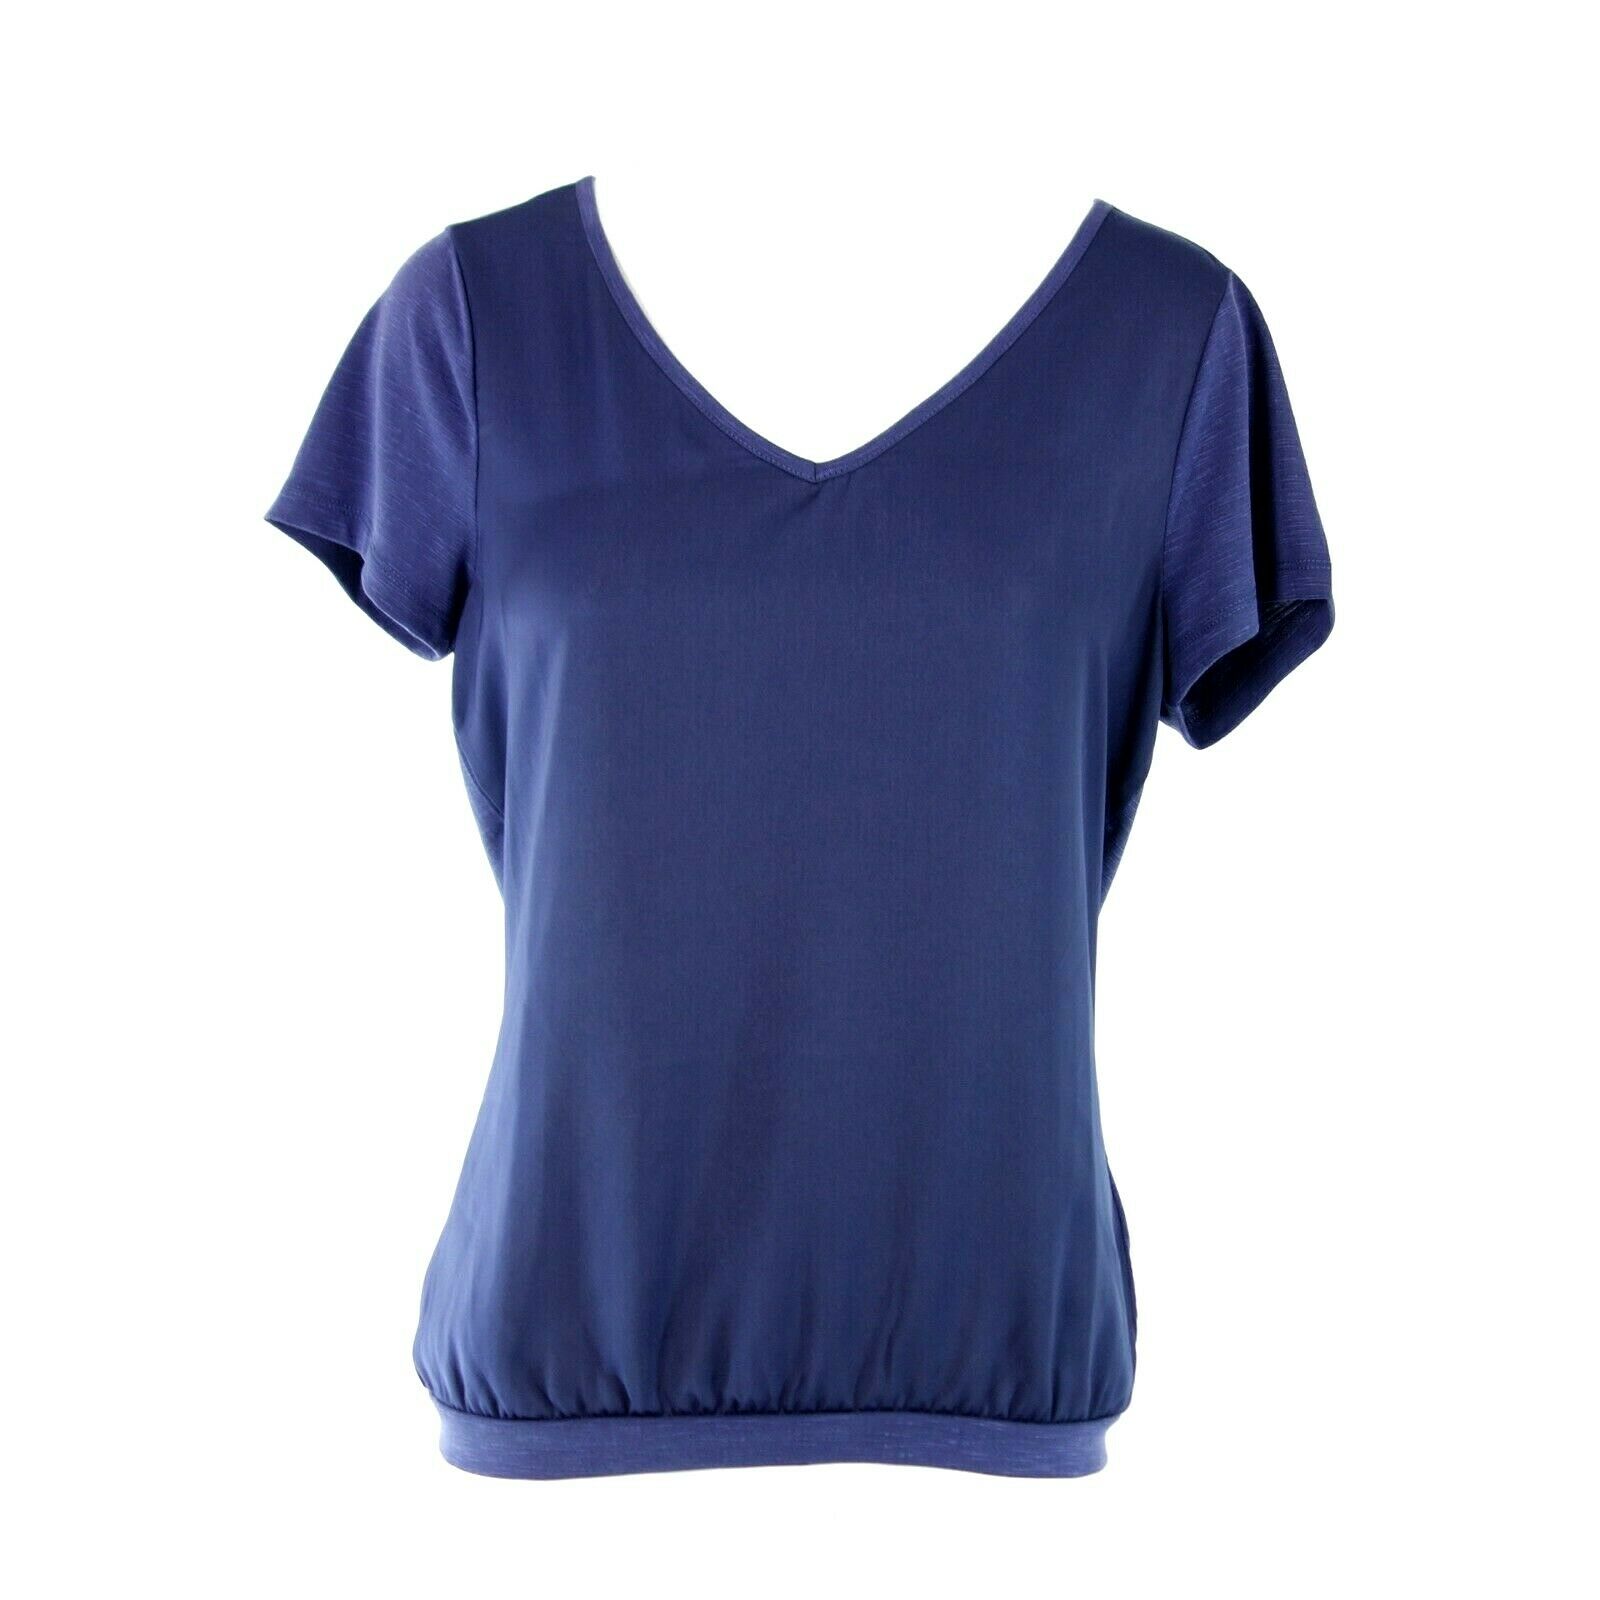 EXPRESSO Damen Shirt Damenshirt Sommershirt Tunika Oberteil Gilen Blau S 36 Neu